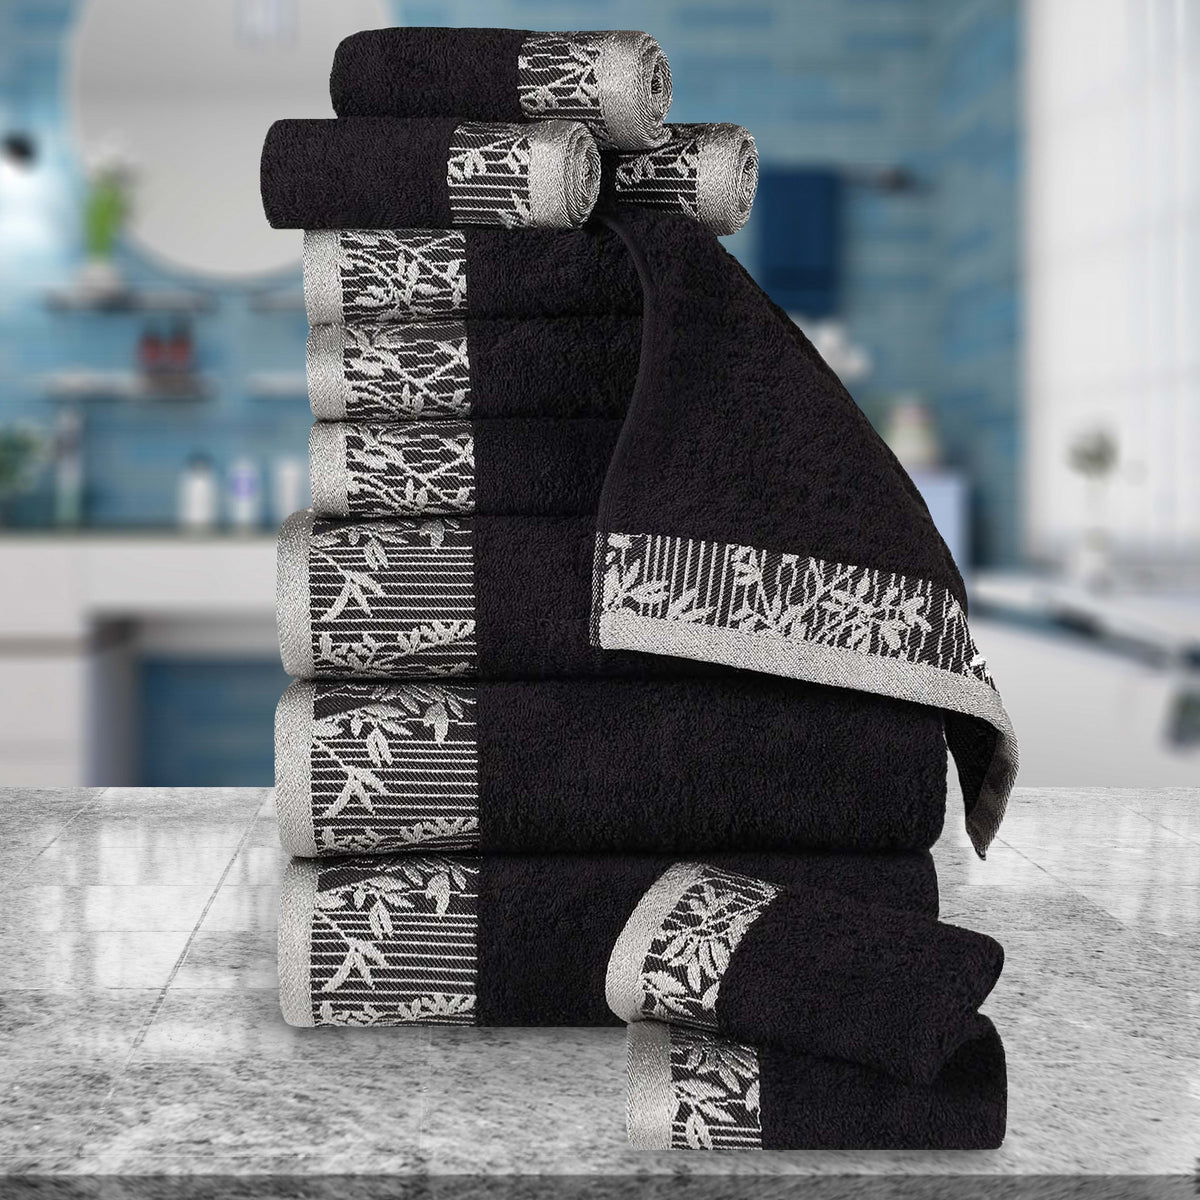 Superior Wisteria Cotton Floral Jacquard 12 Piece Towel Set